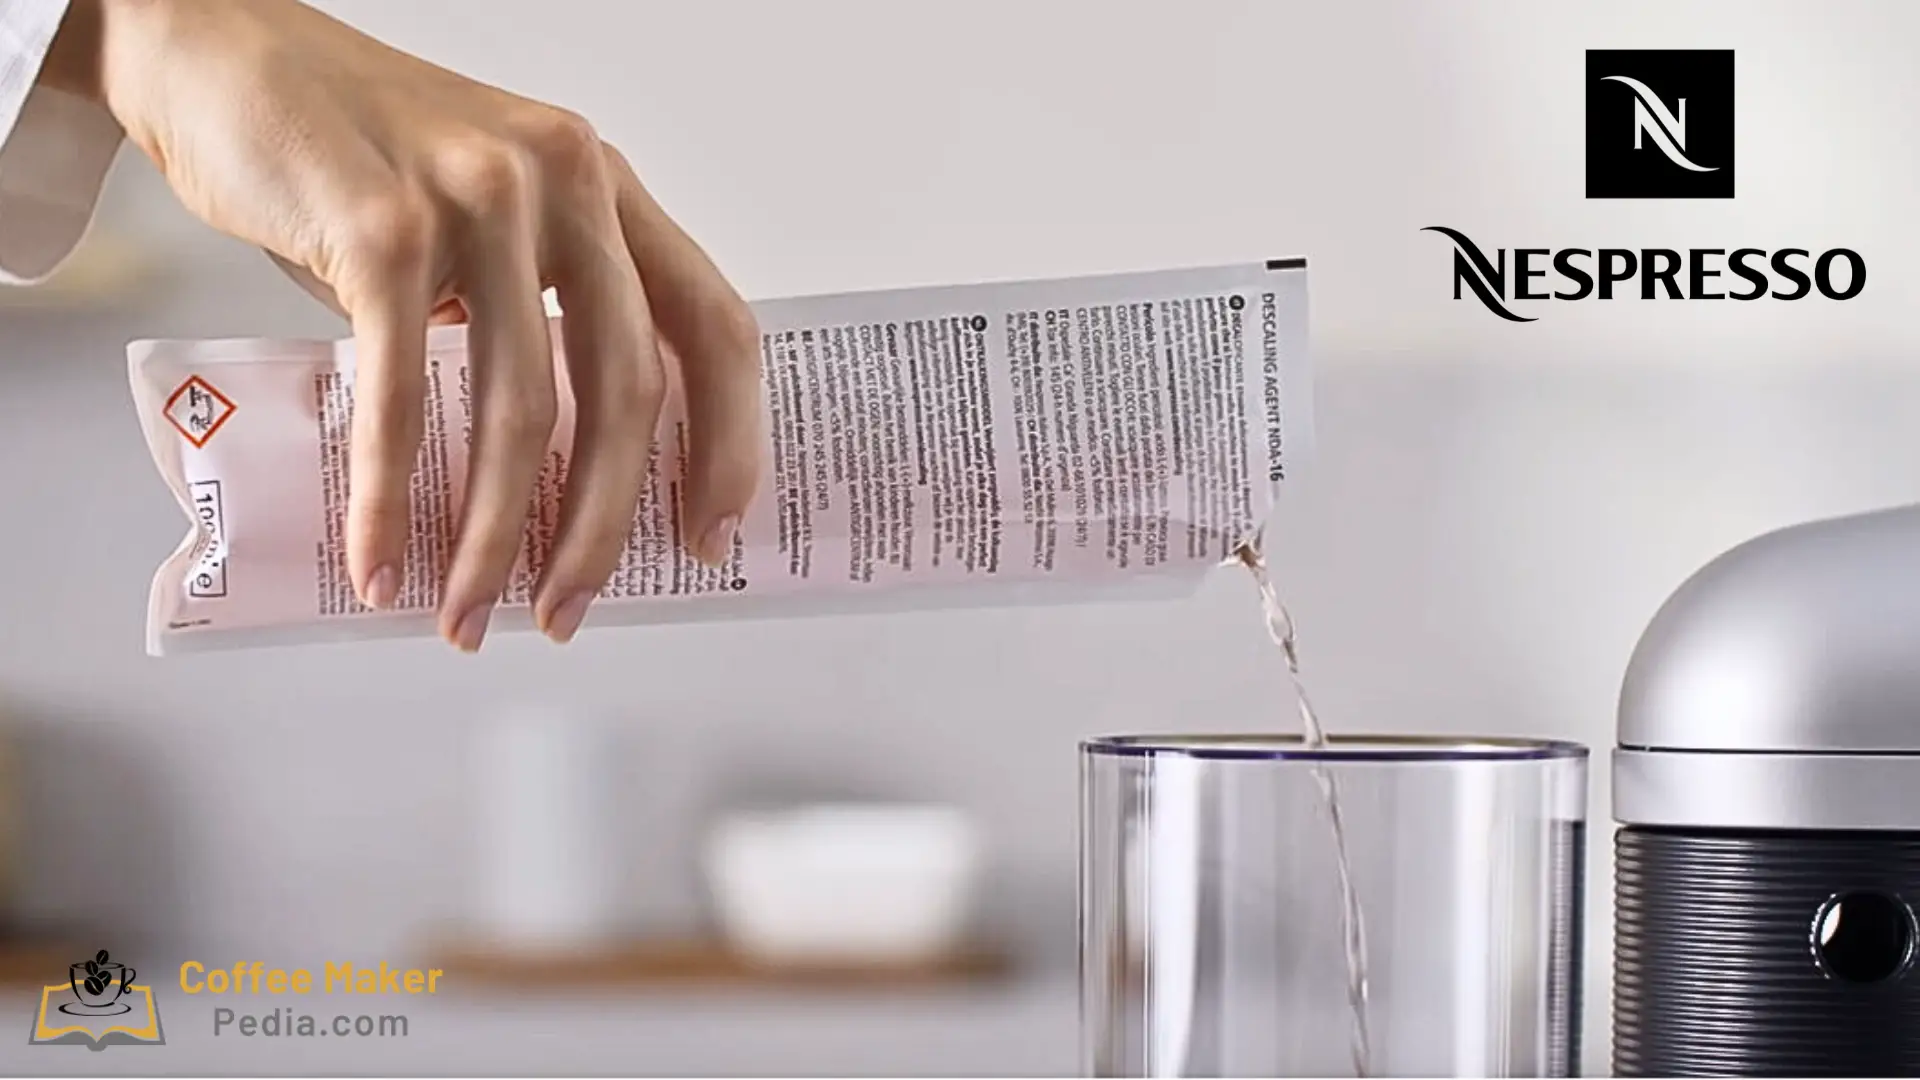 How to descale your Nespresso machine